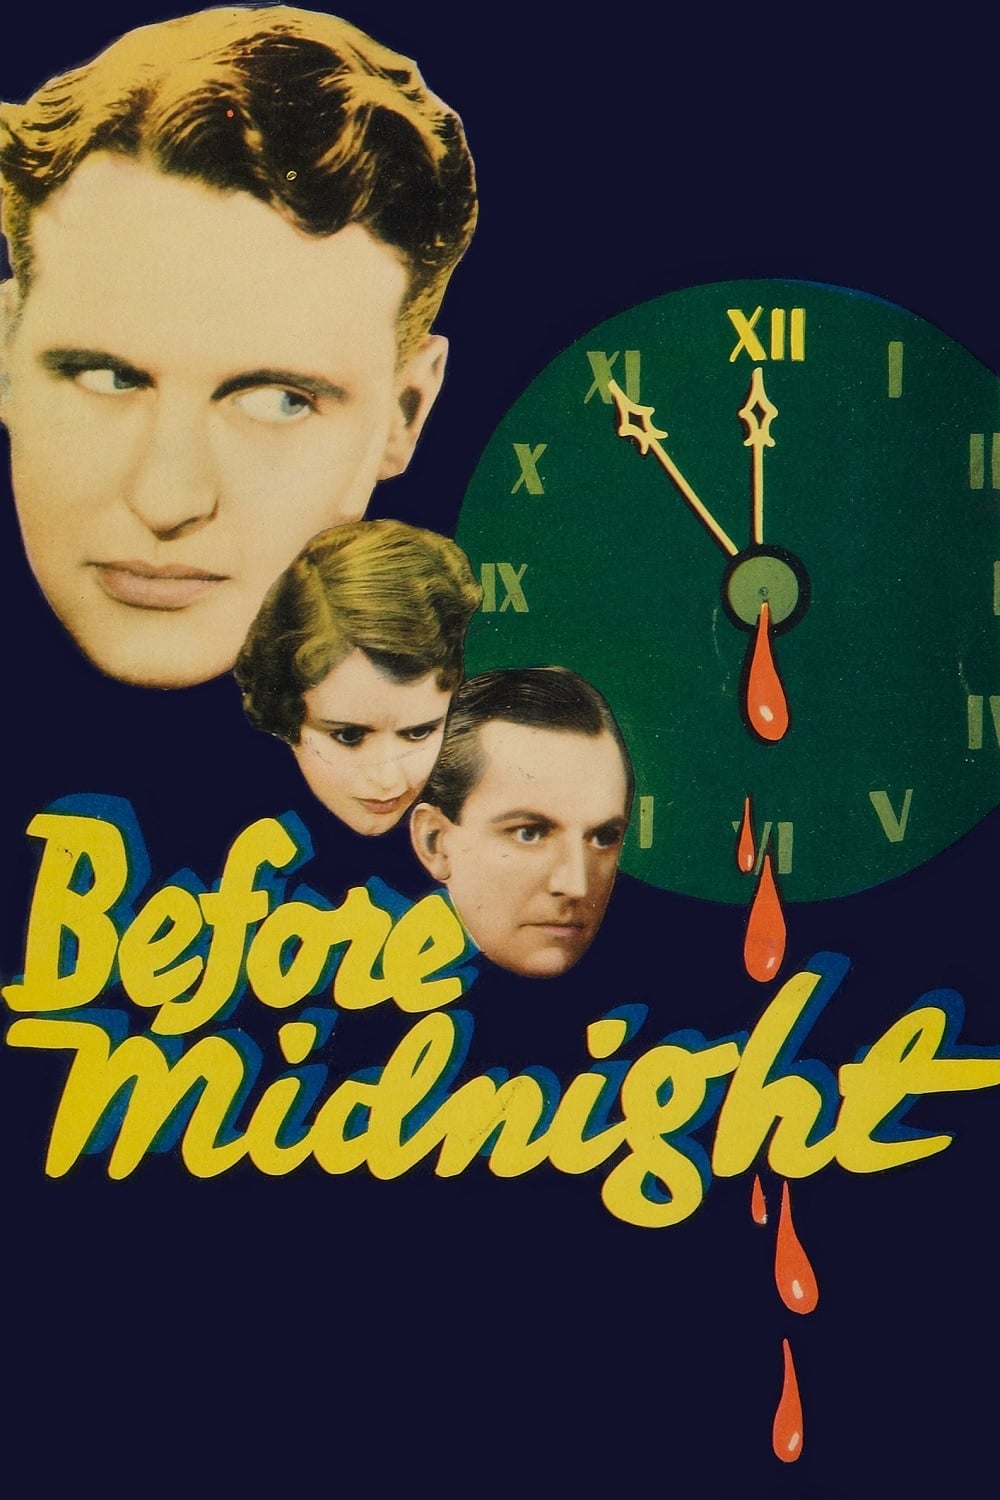 Before Midnight (1933)